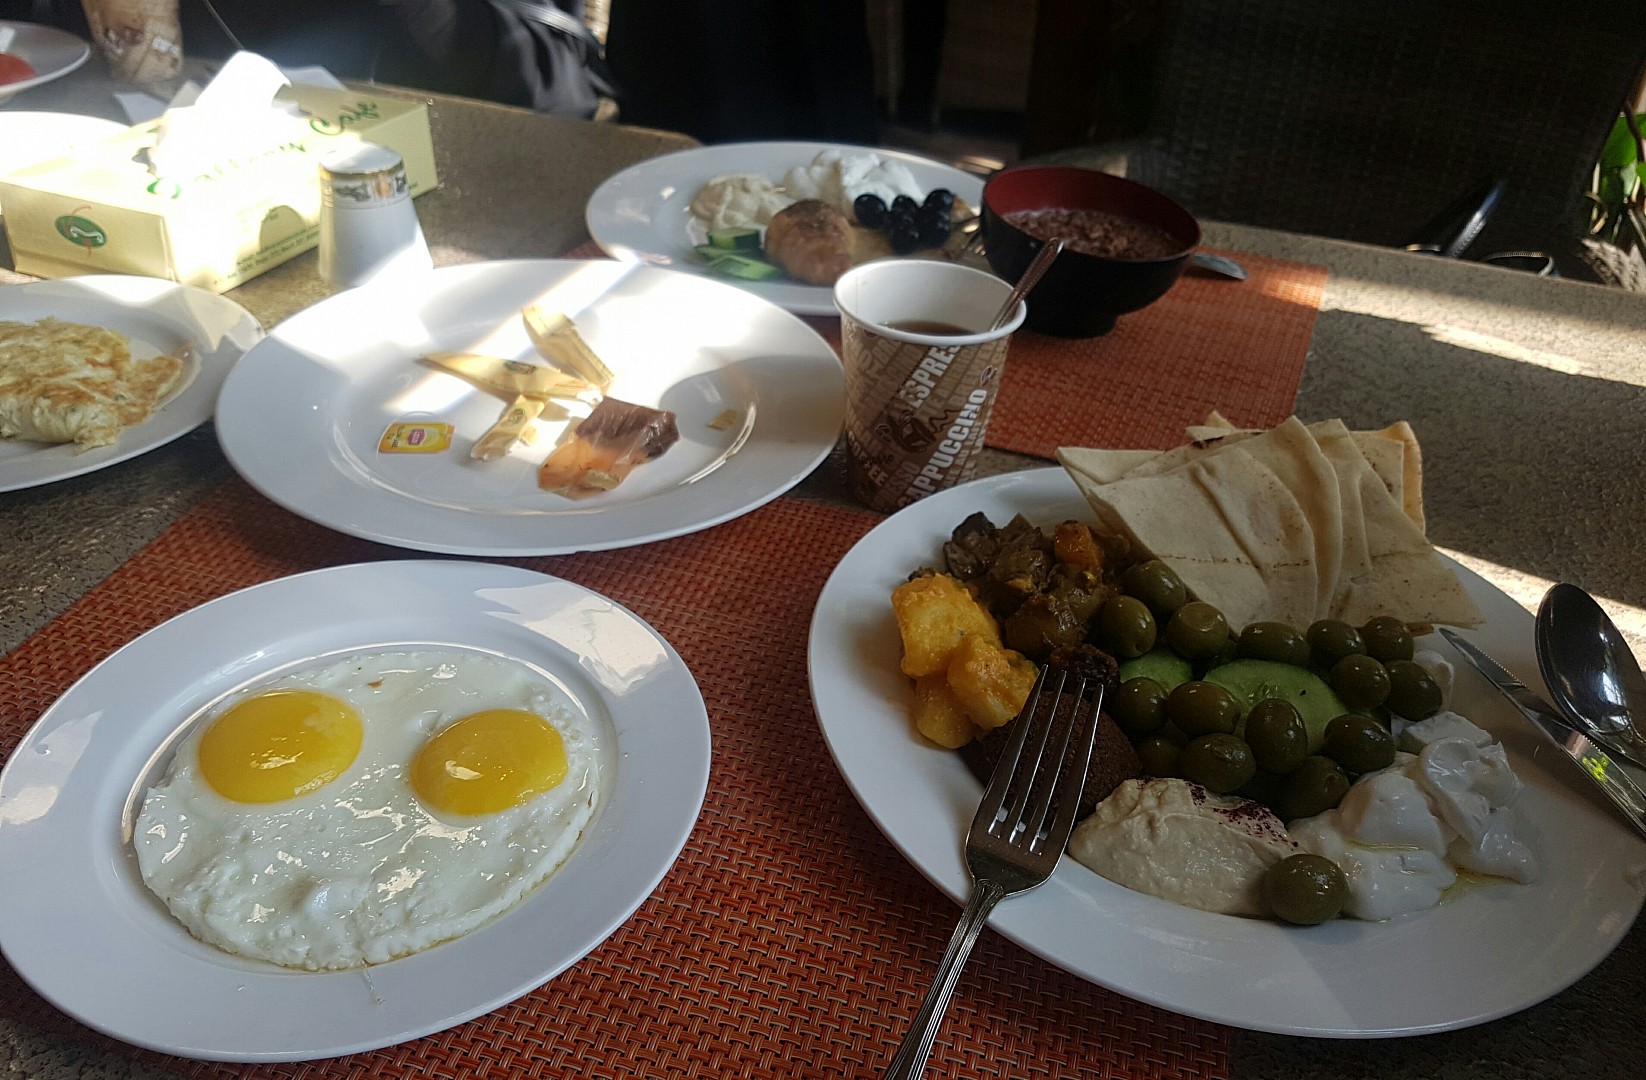 Breakfast buffet. 4.5 BD @ Veranda Cafe - Bahrain